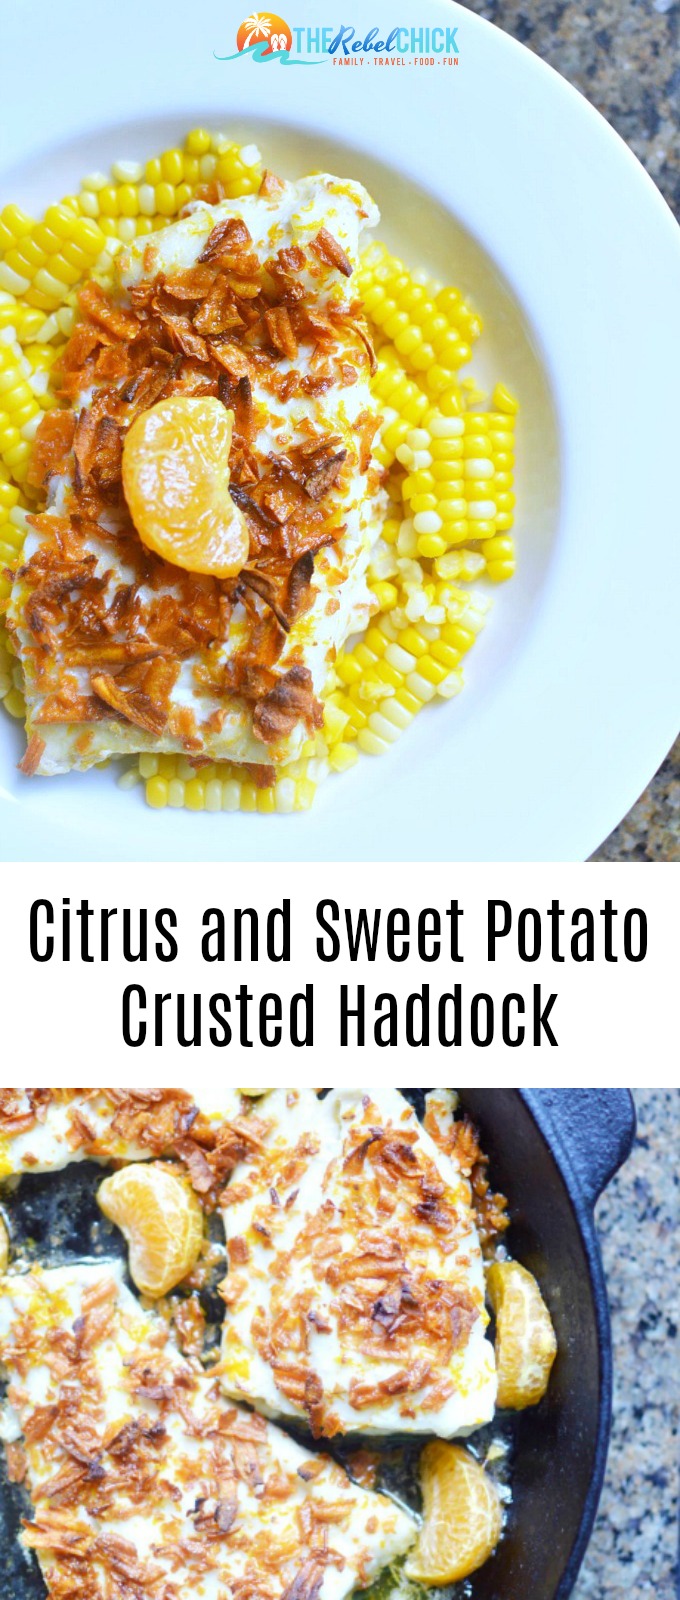 Citrus and Sweet Potato Crusted Haddock Recipe